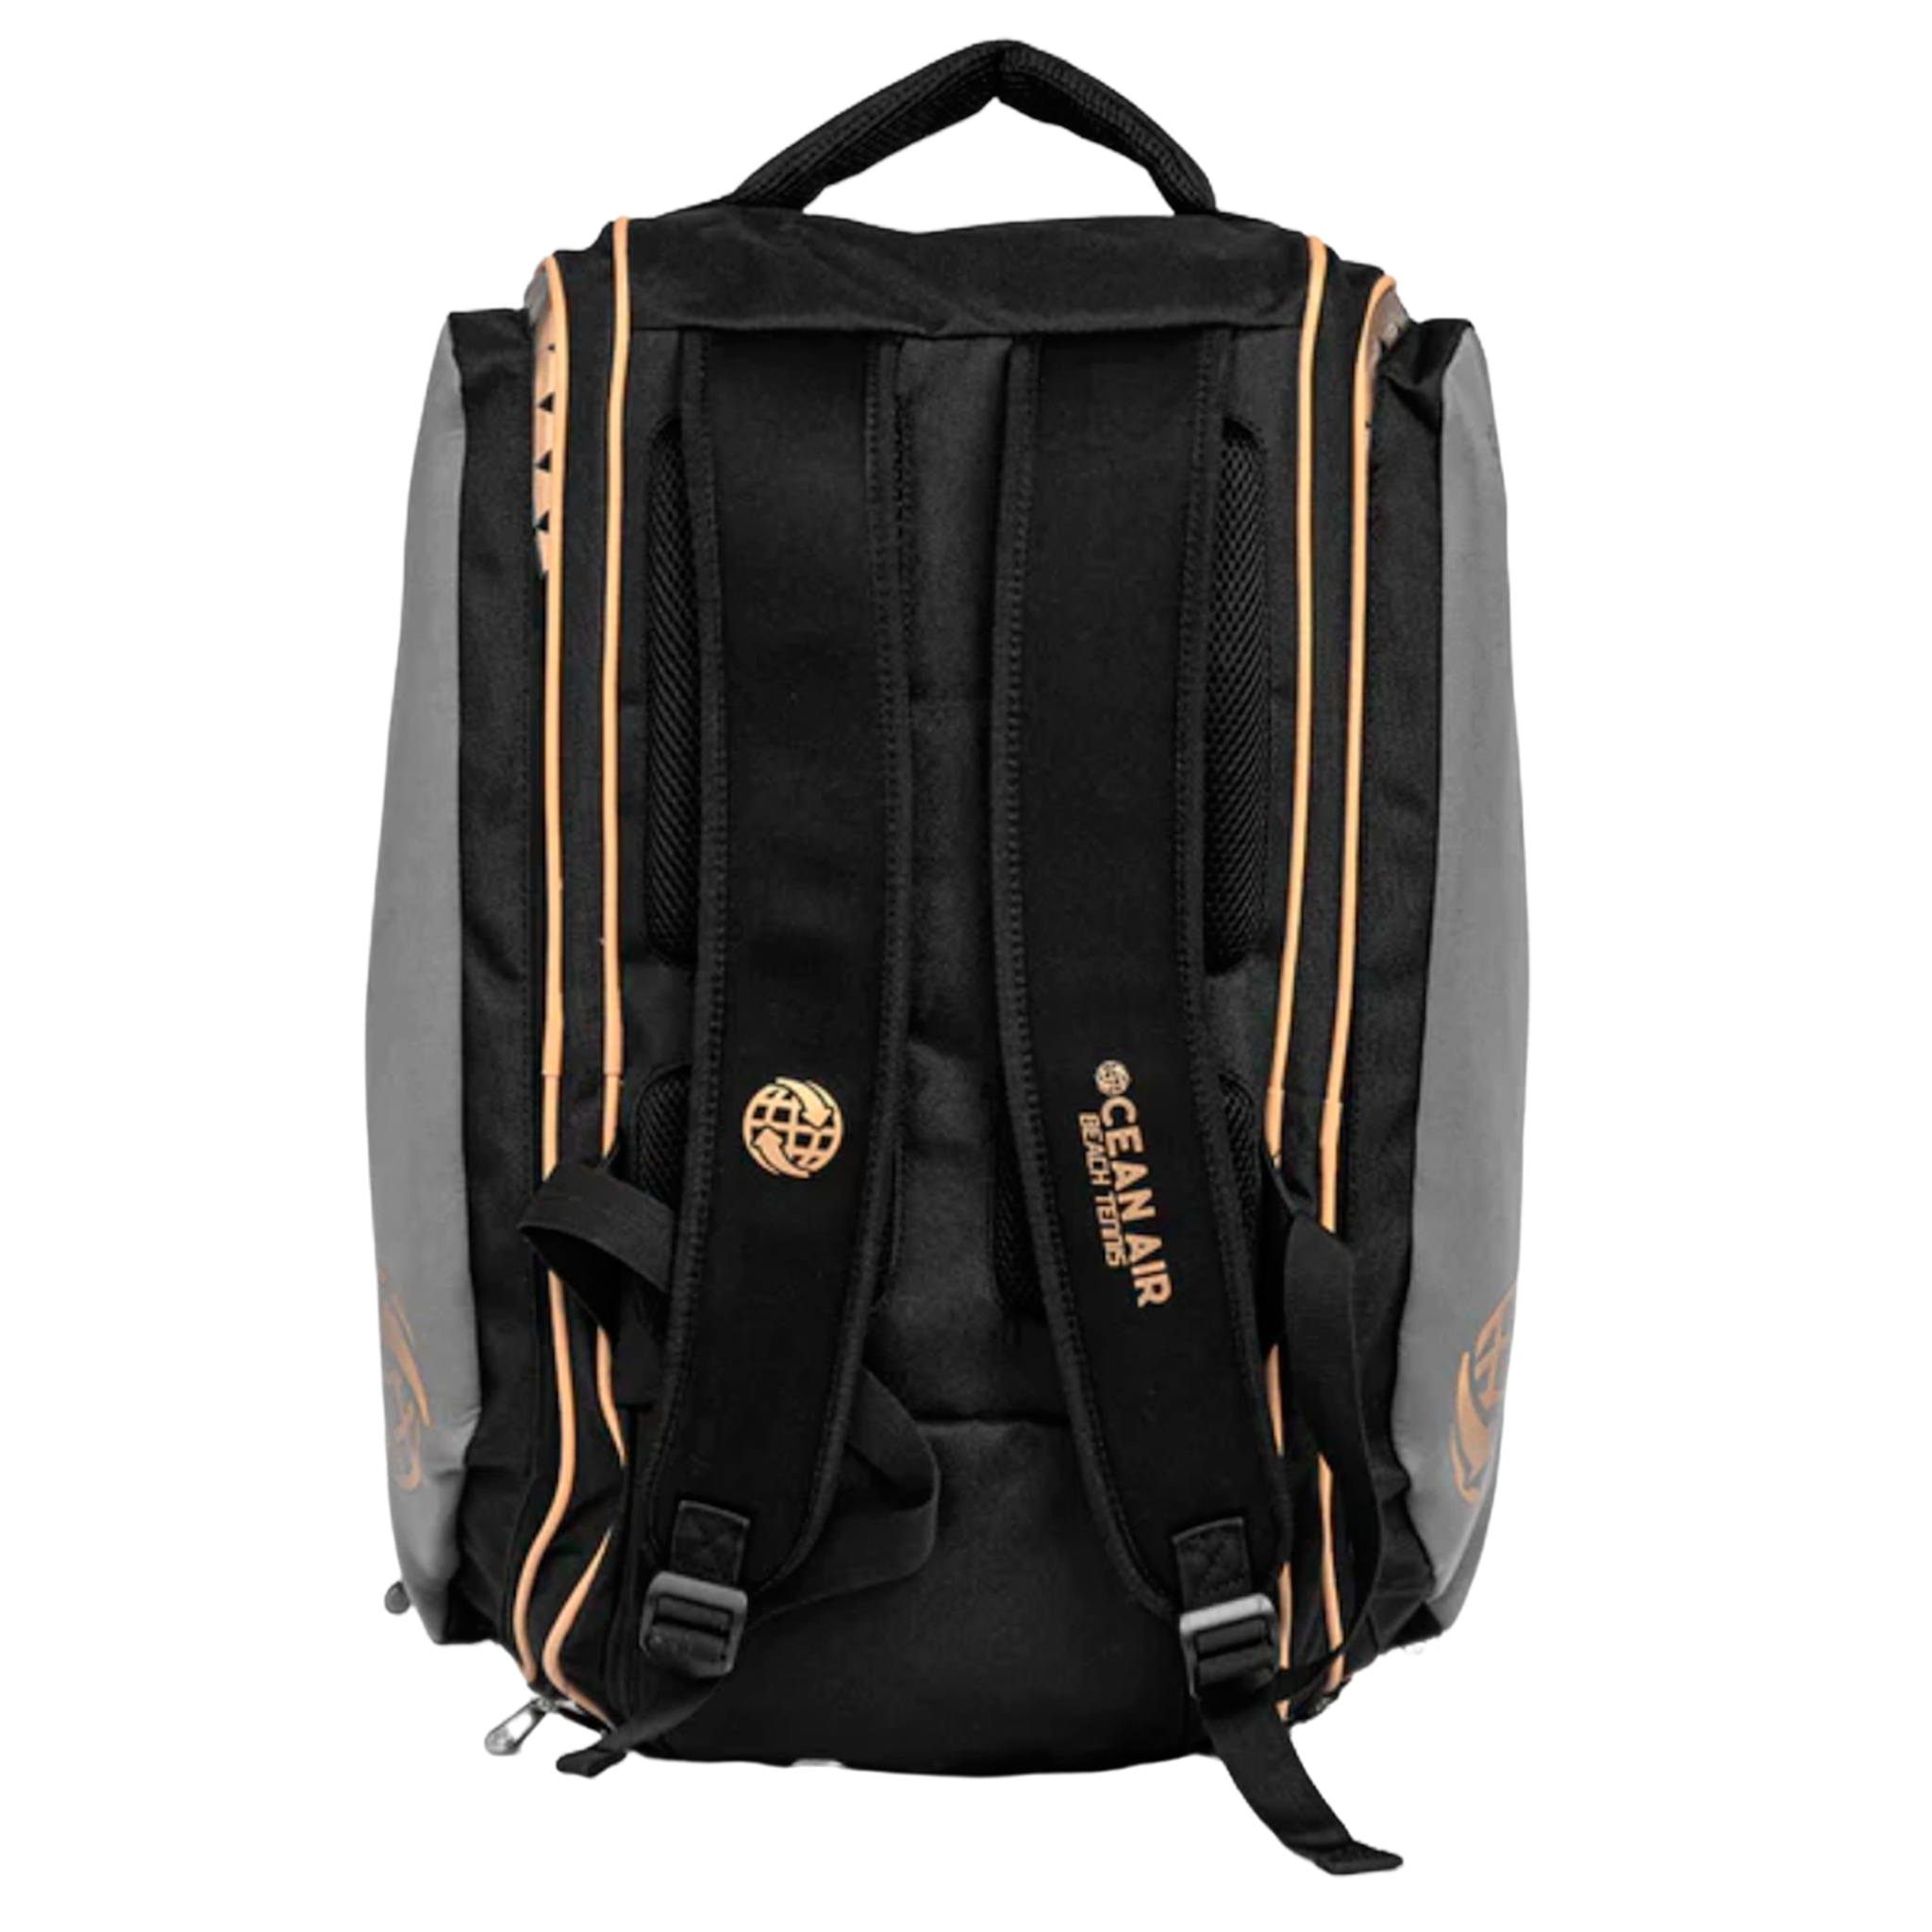 Ocean Air Pro BT Black Compact Bag